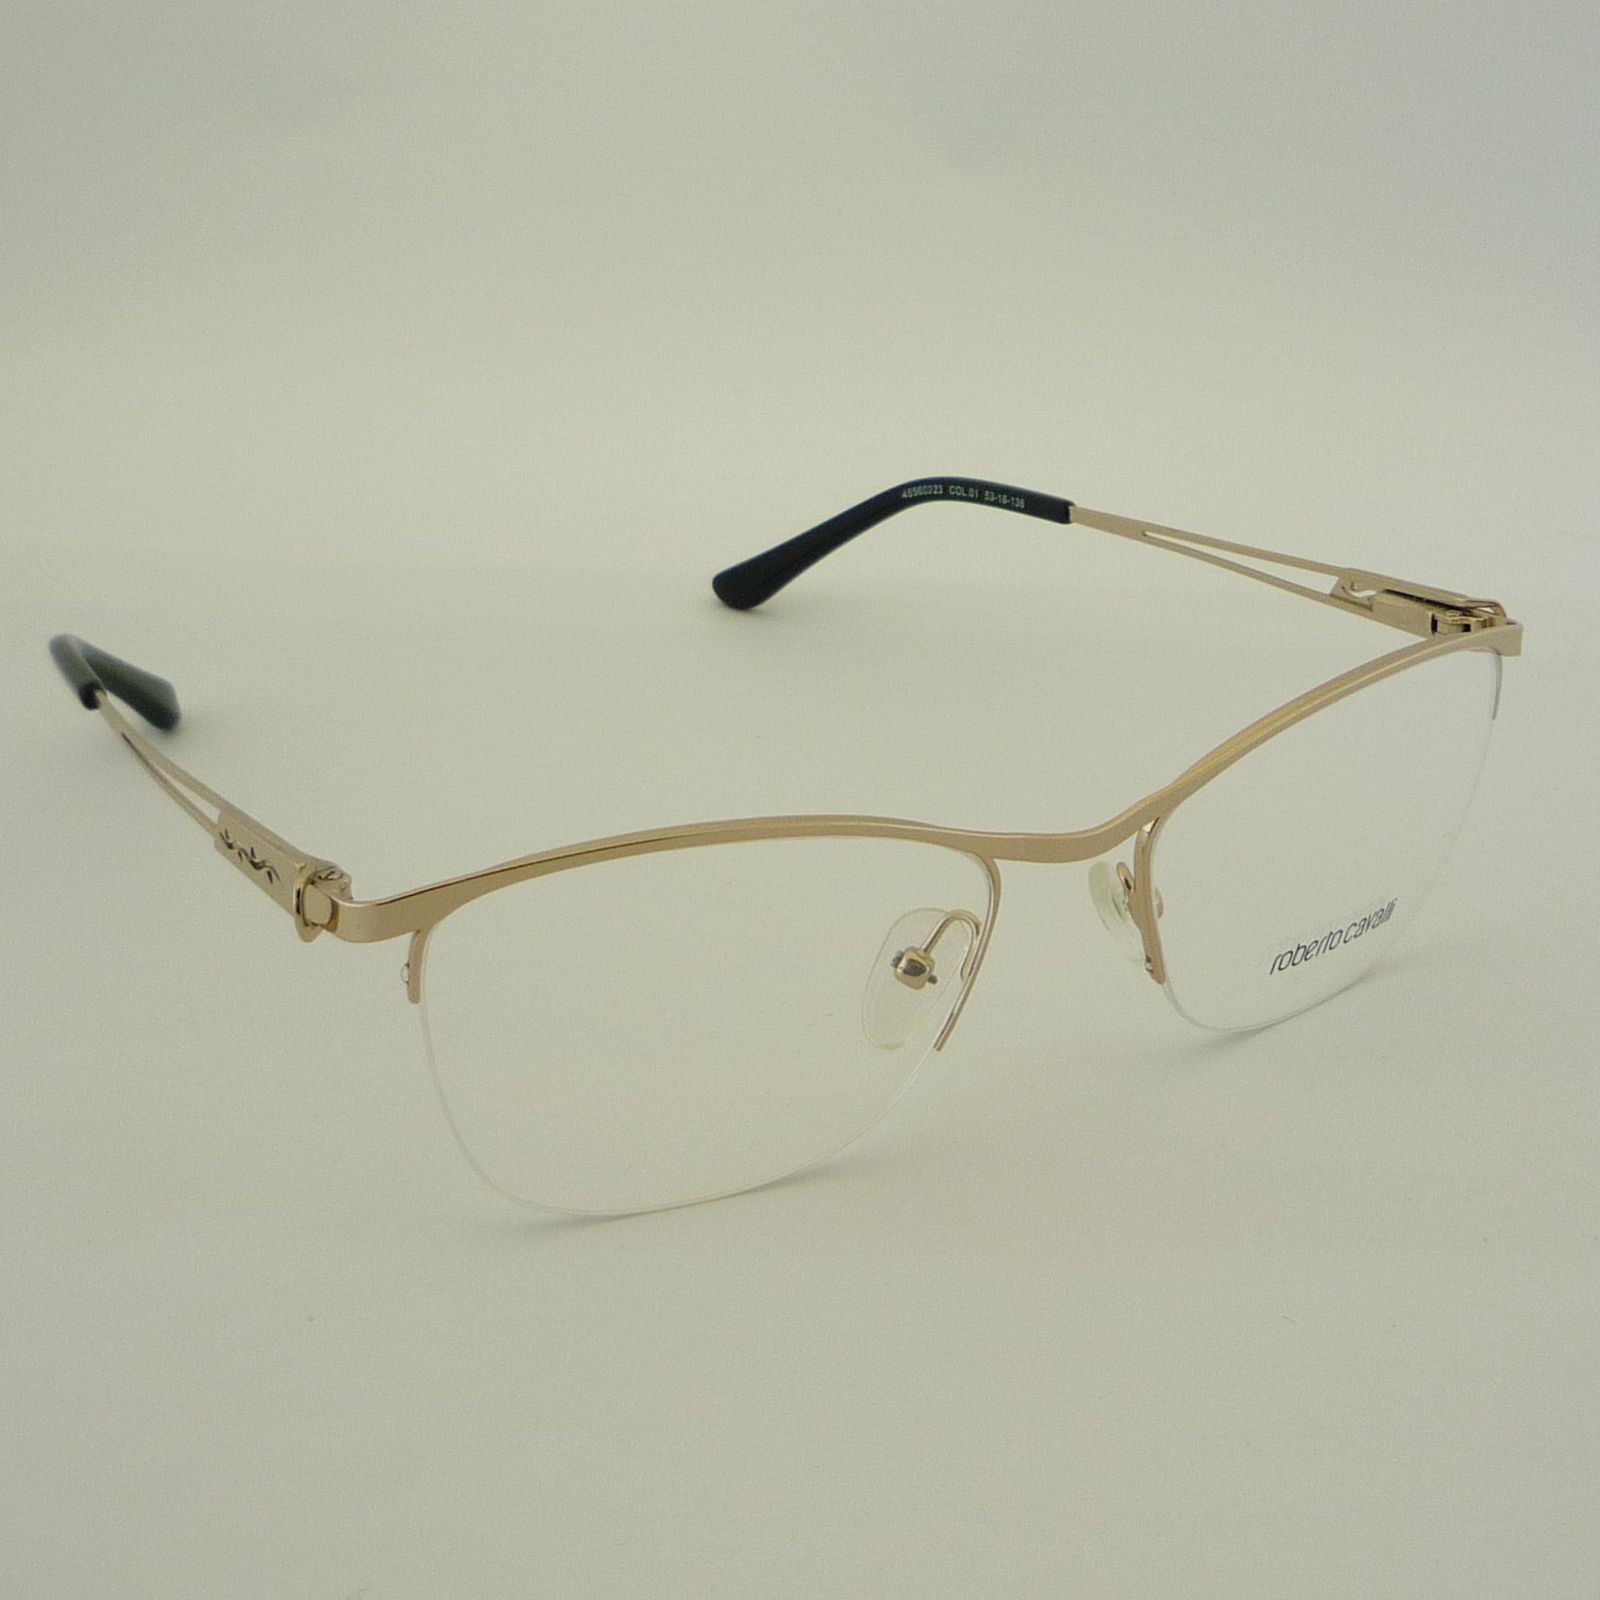 فریم عینک طبی زنانه روبرتو کاوالی مدل 45560223C1 -  - 4